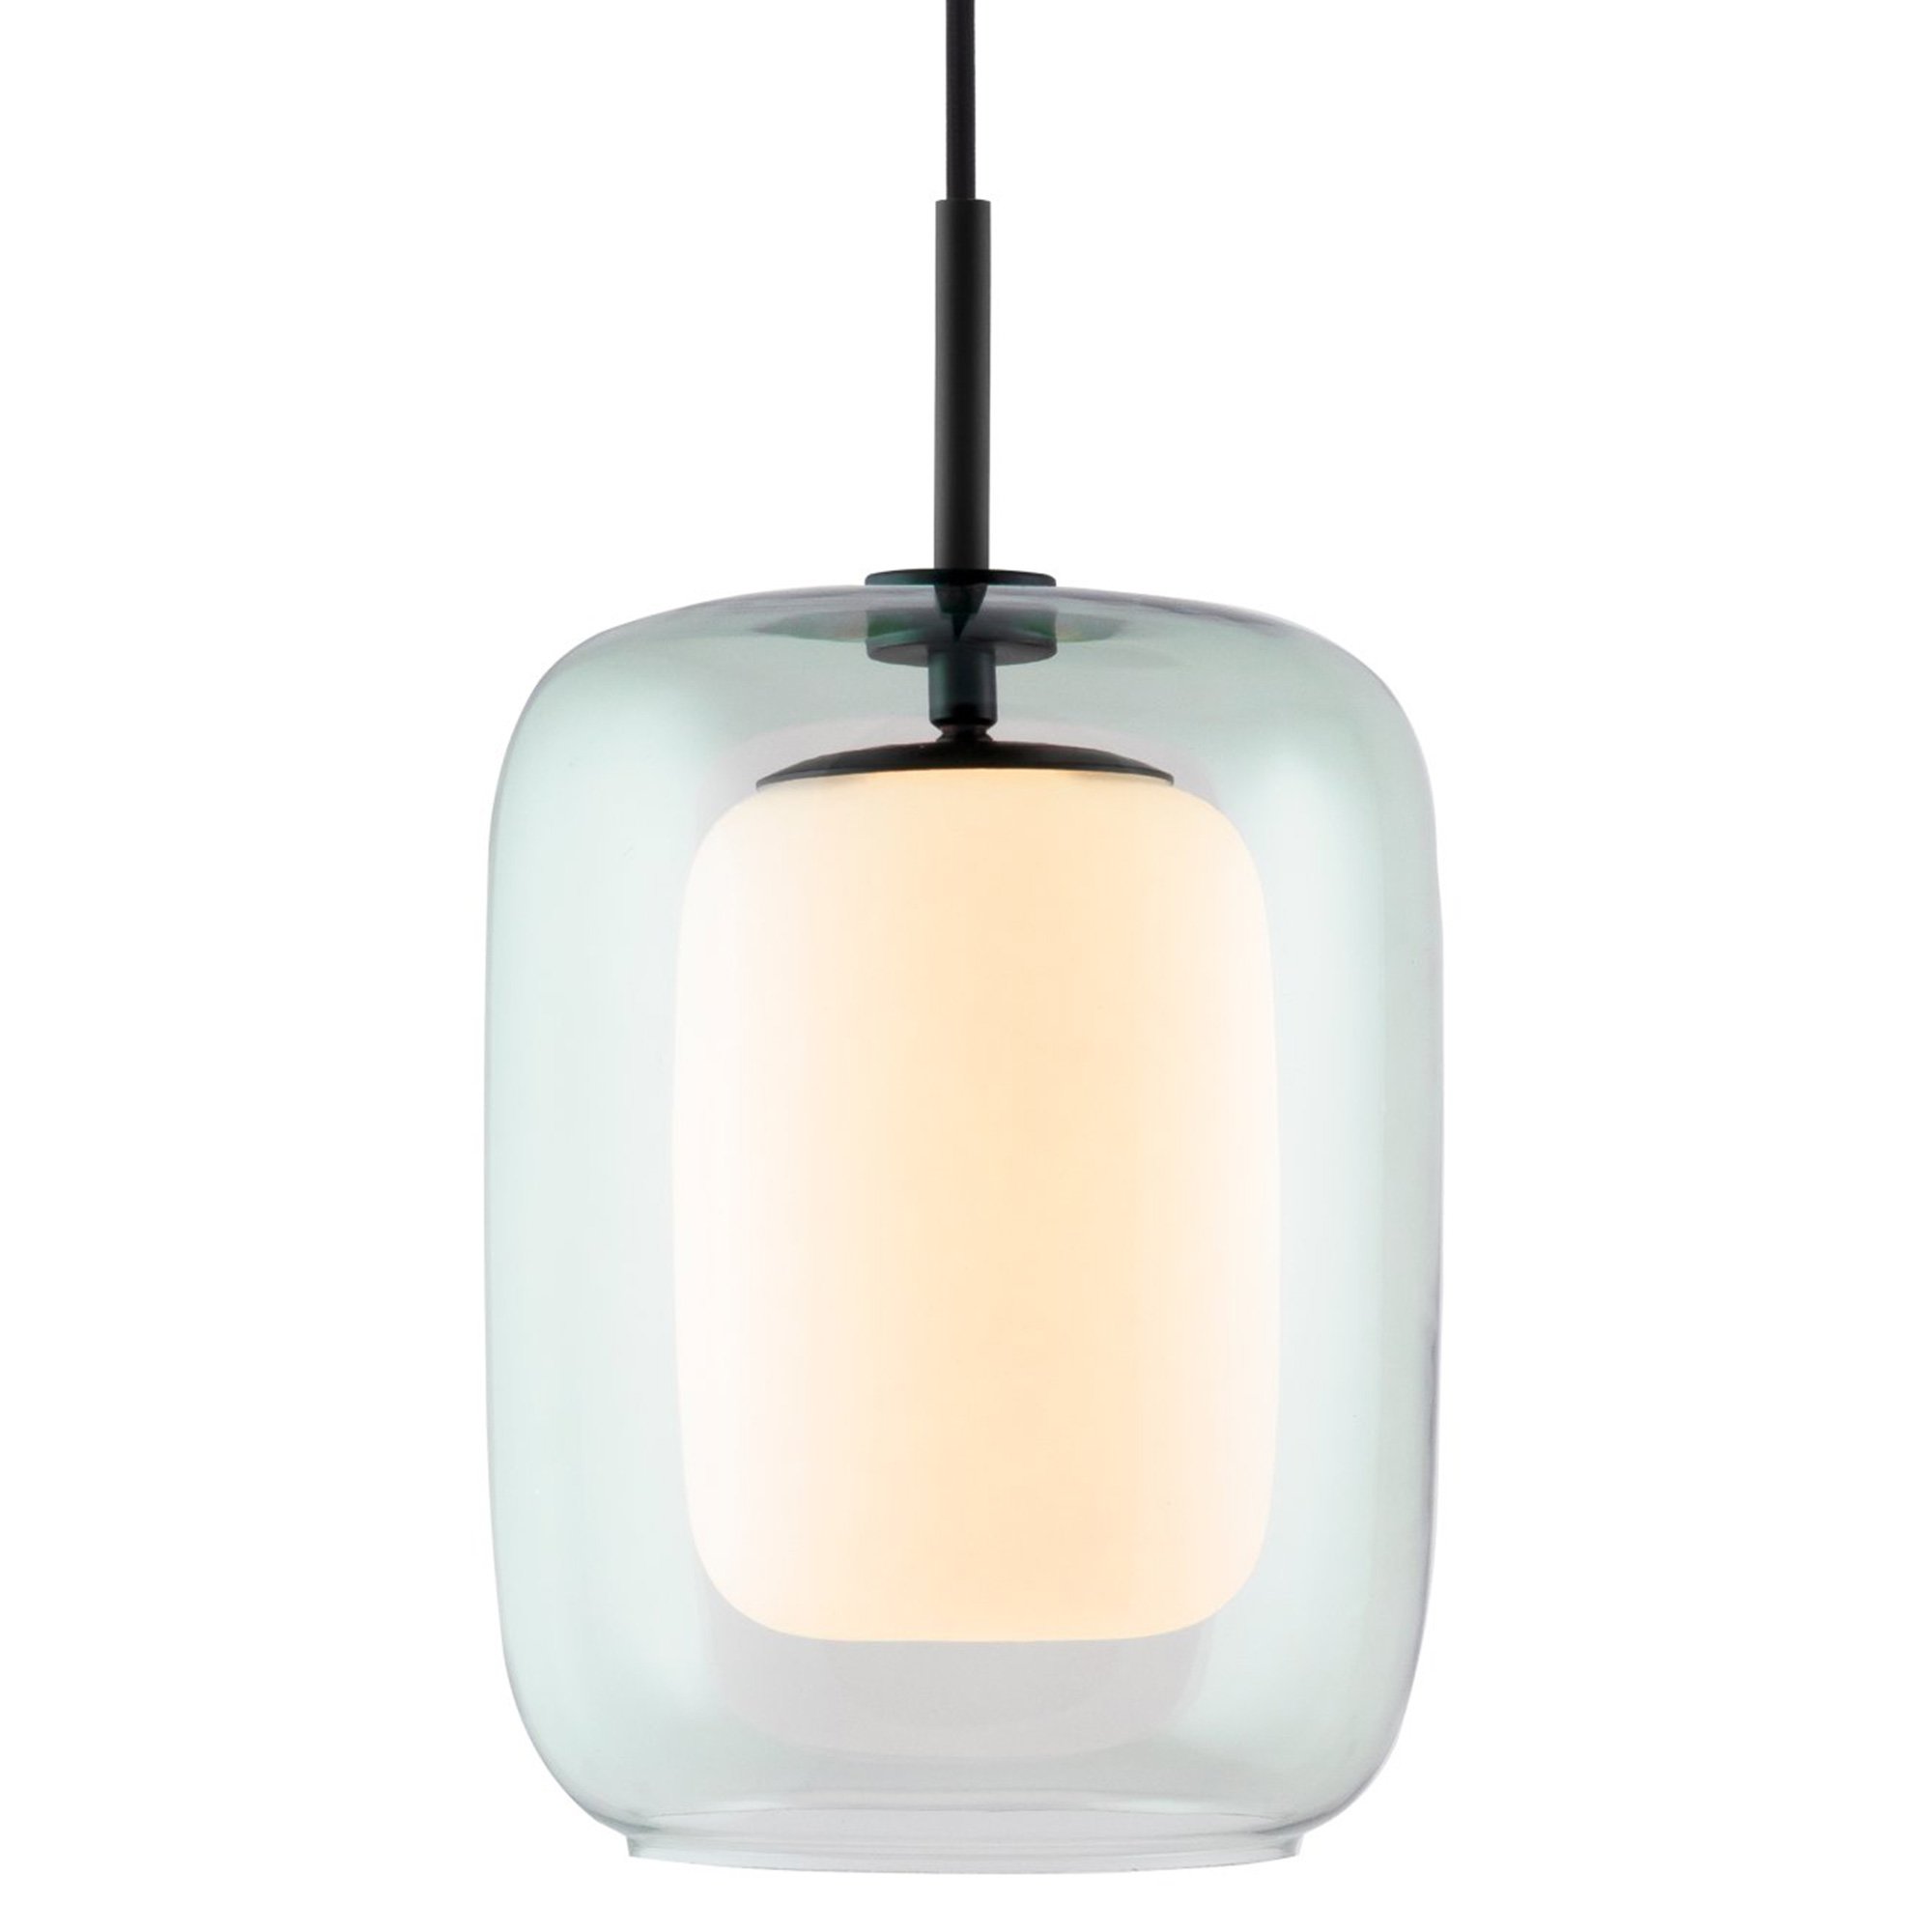 Globen Lighting Cuboza loftslampe, 20 cm, grøn/hvid